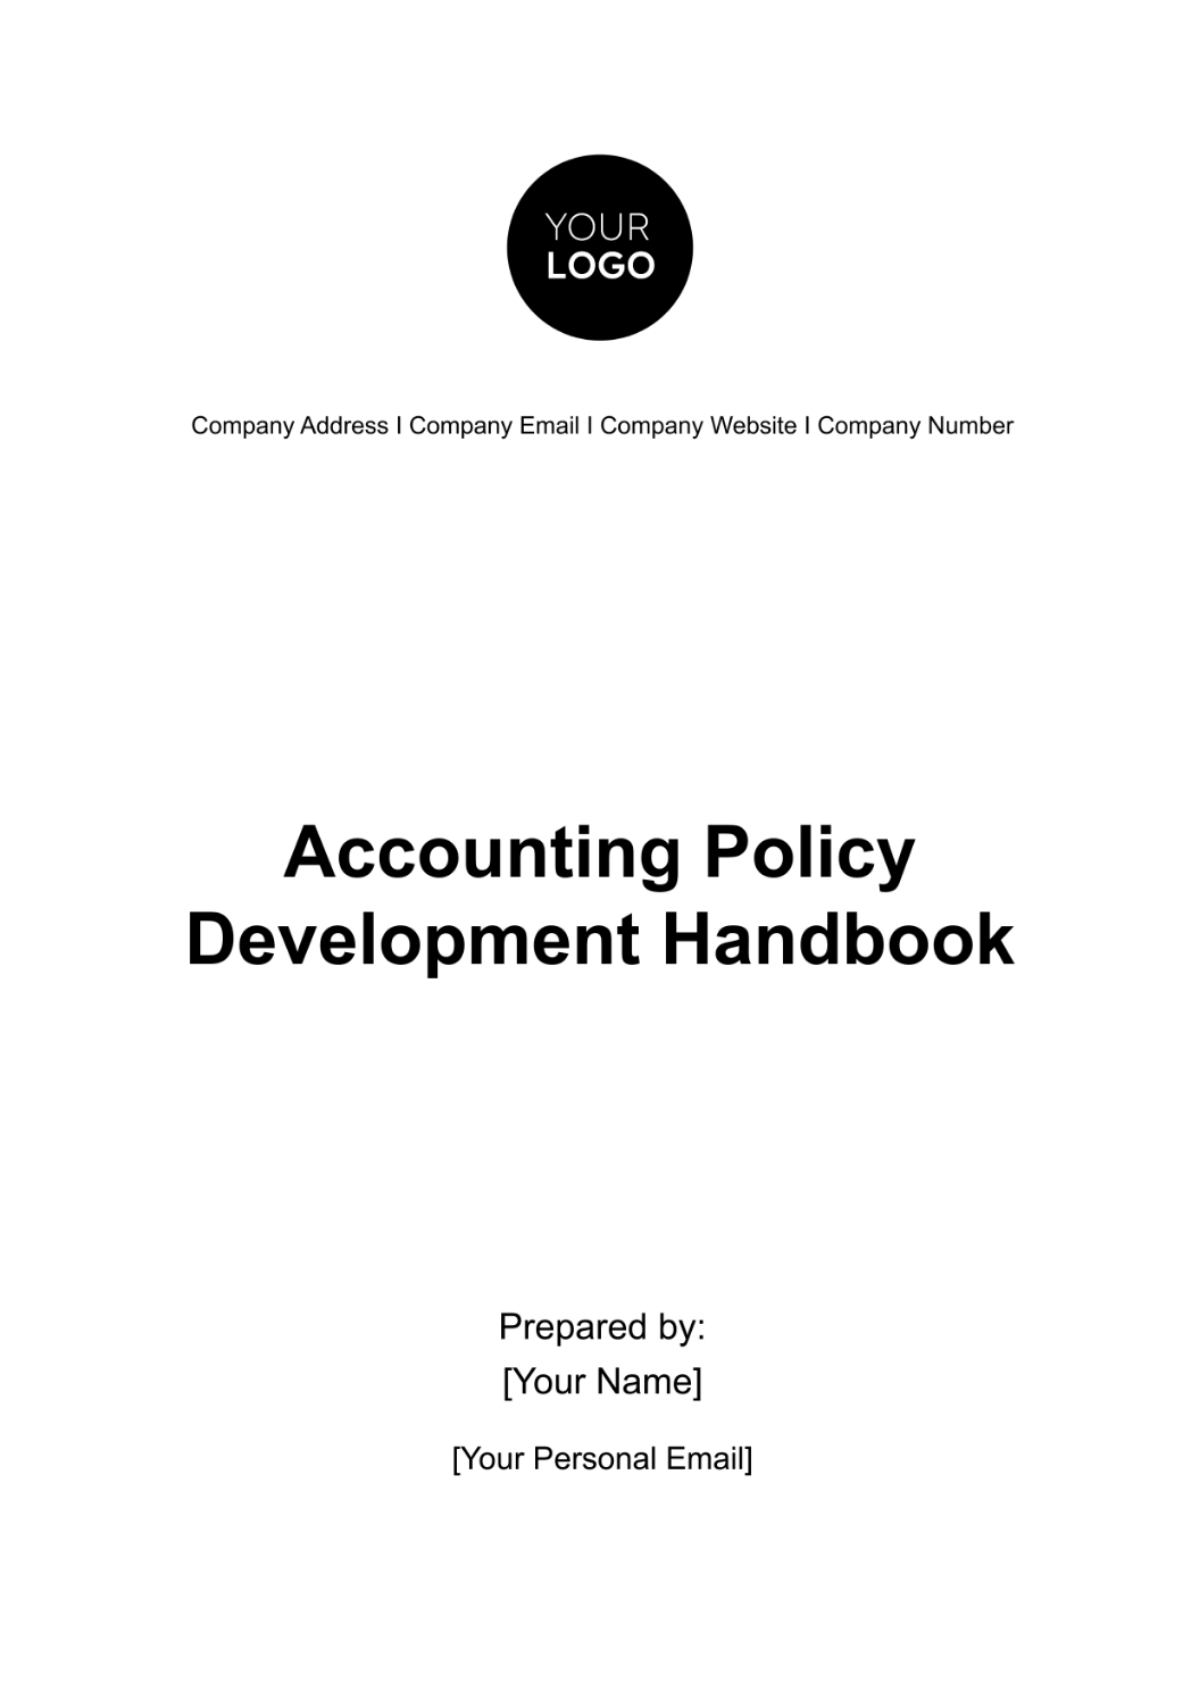 Free Accounting Policy Development Handbook Template